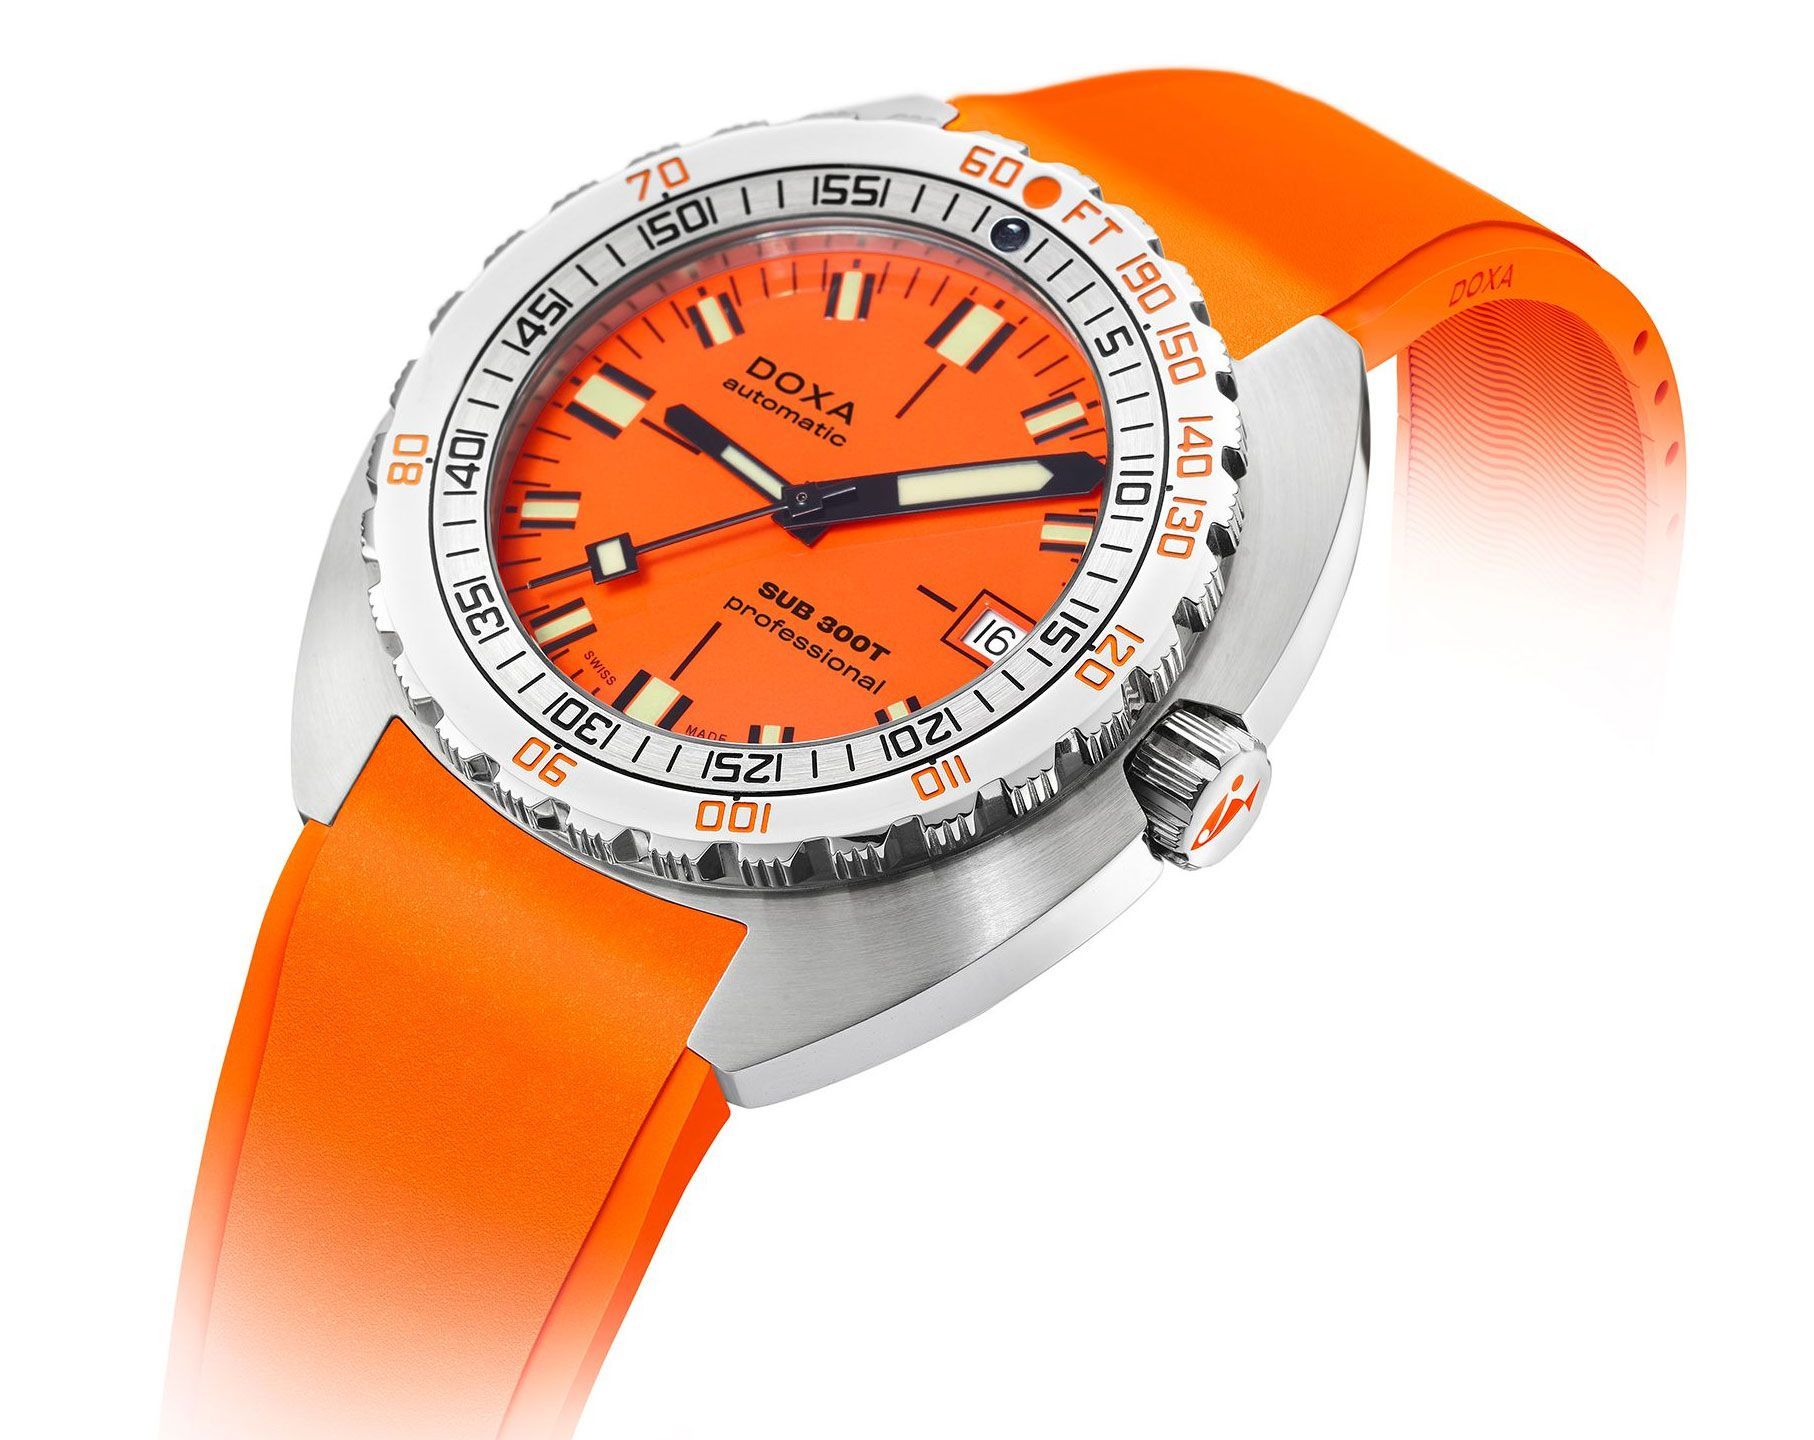 Doxa Professional 42.5 mm Watch in Orange Dial For Men - 5